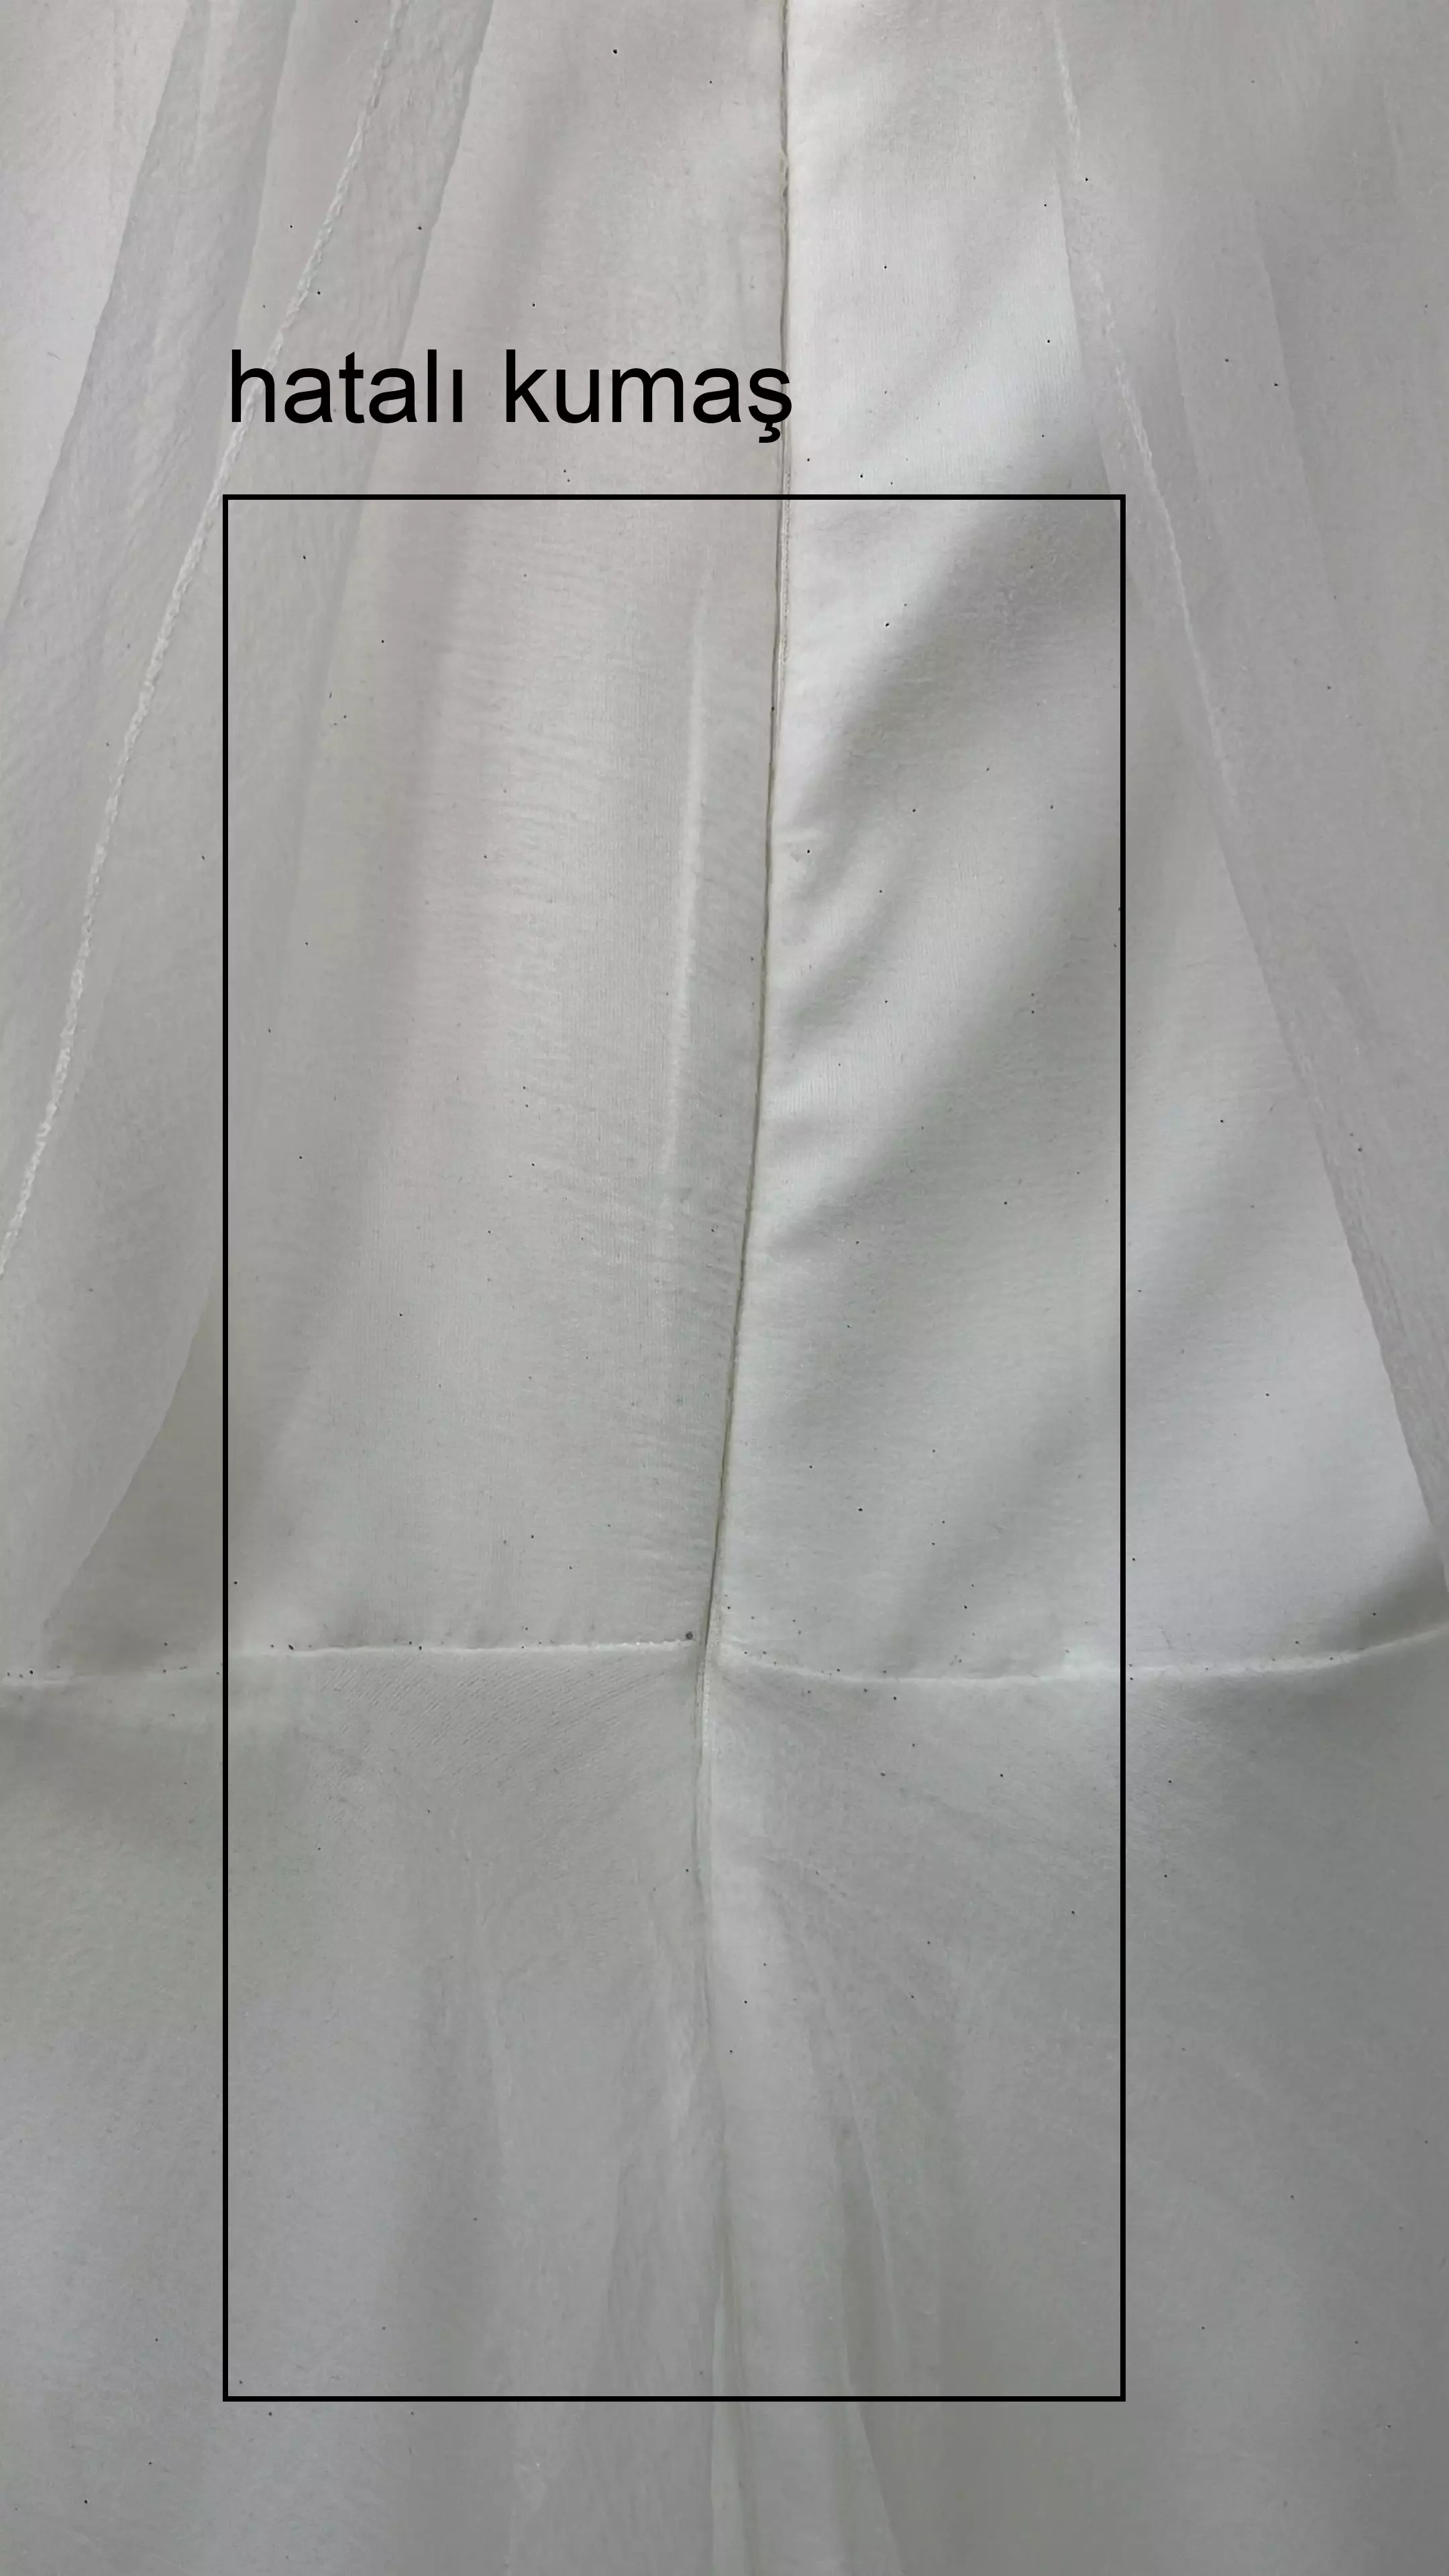 White tulle long sleeve maxi dress